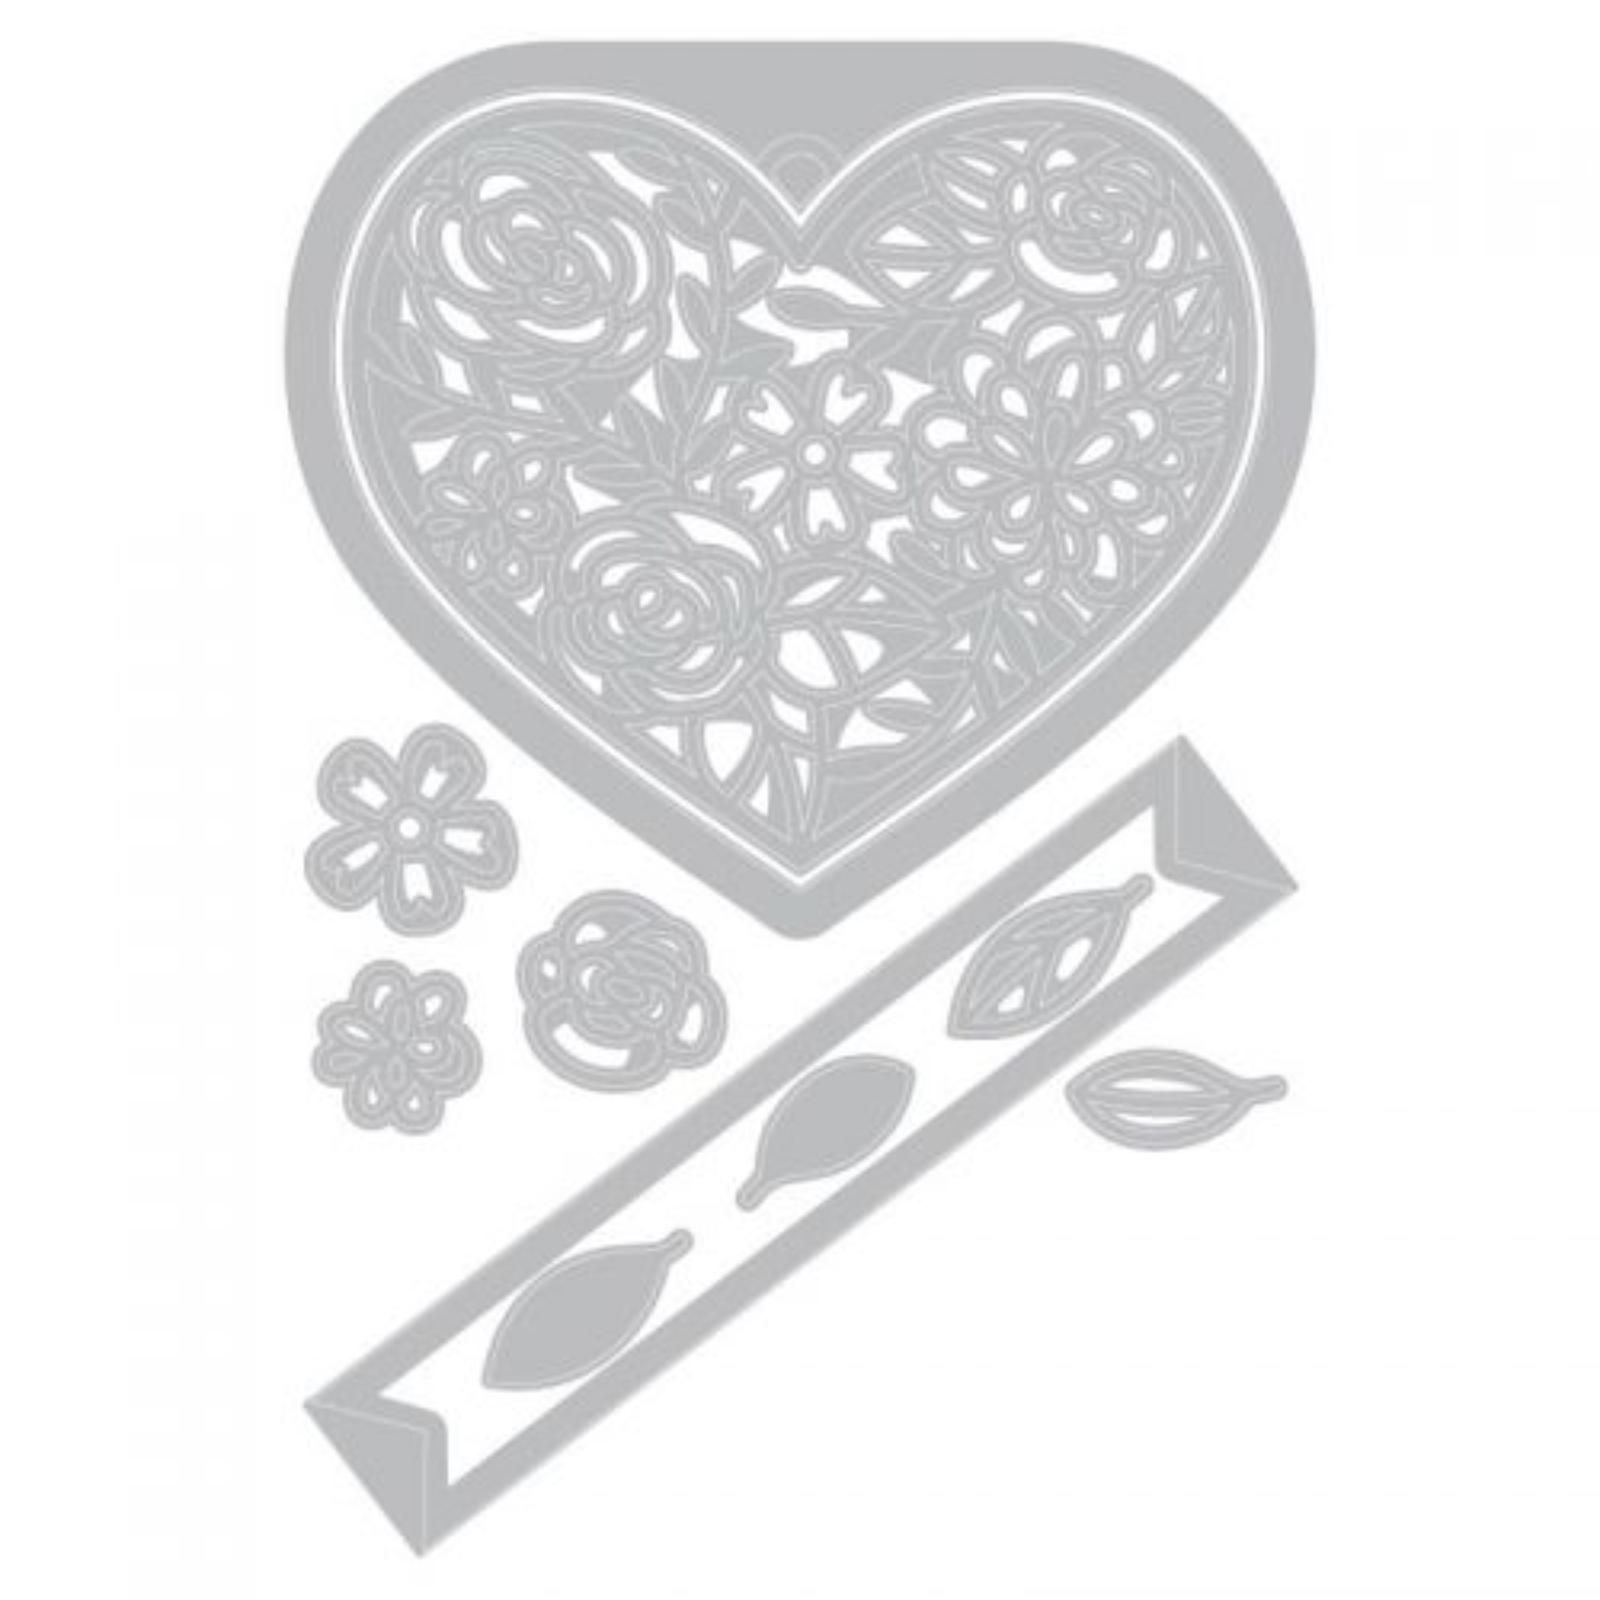 Sizzix Heart Tag Die Set, Wedding, Valentine's Day, Love, Heart, Flowers, 663623